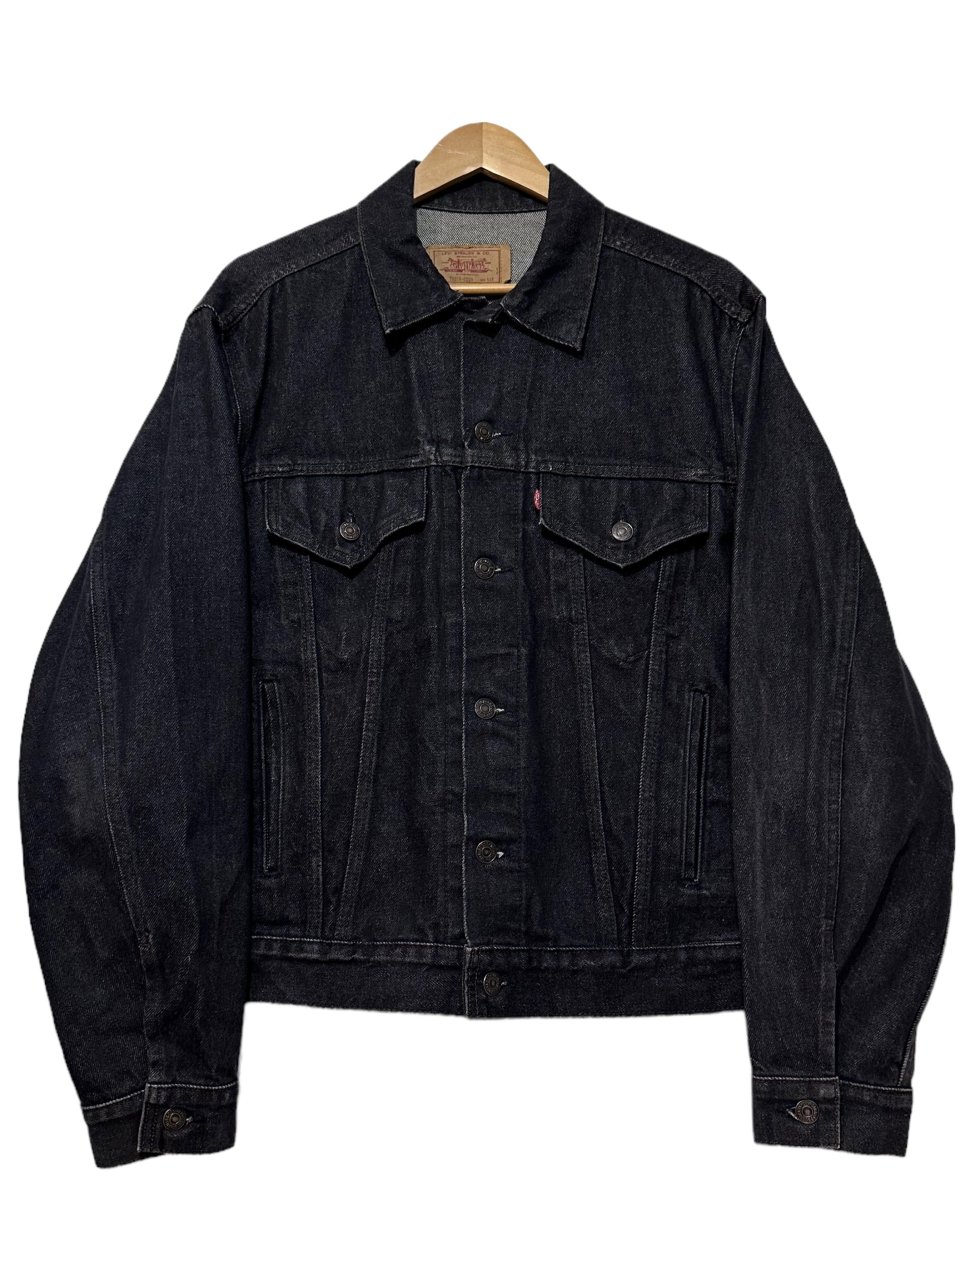 USA製 85年 Levi's 70506-0259 Black Denim Jacket 